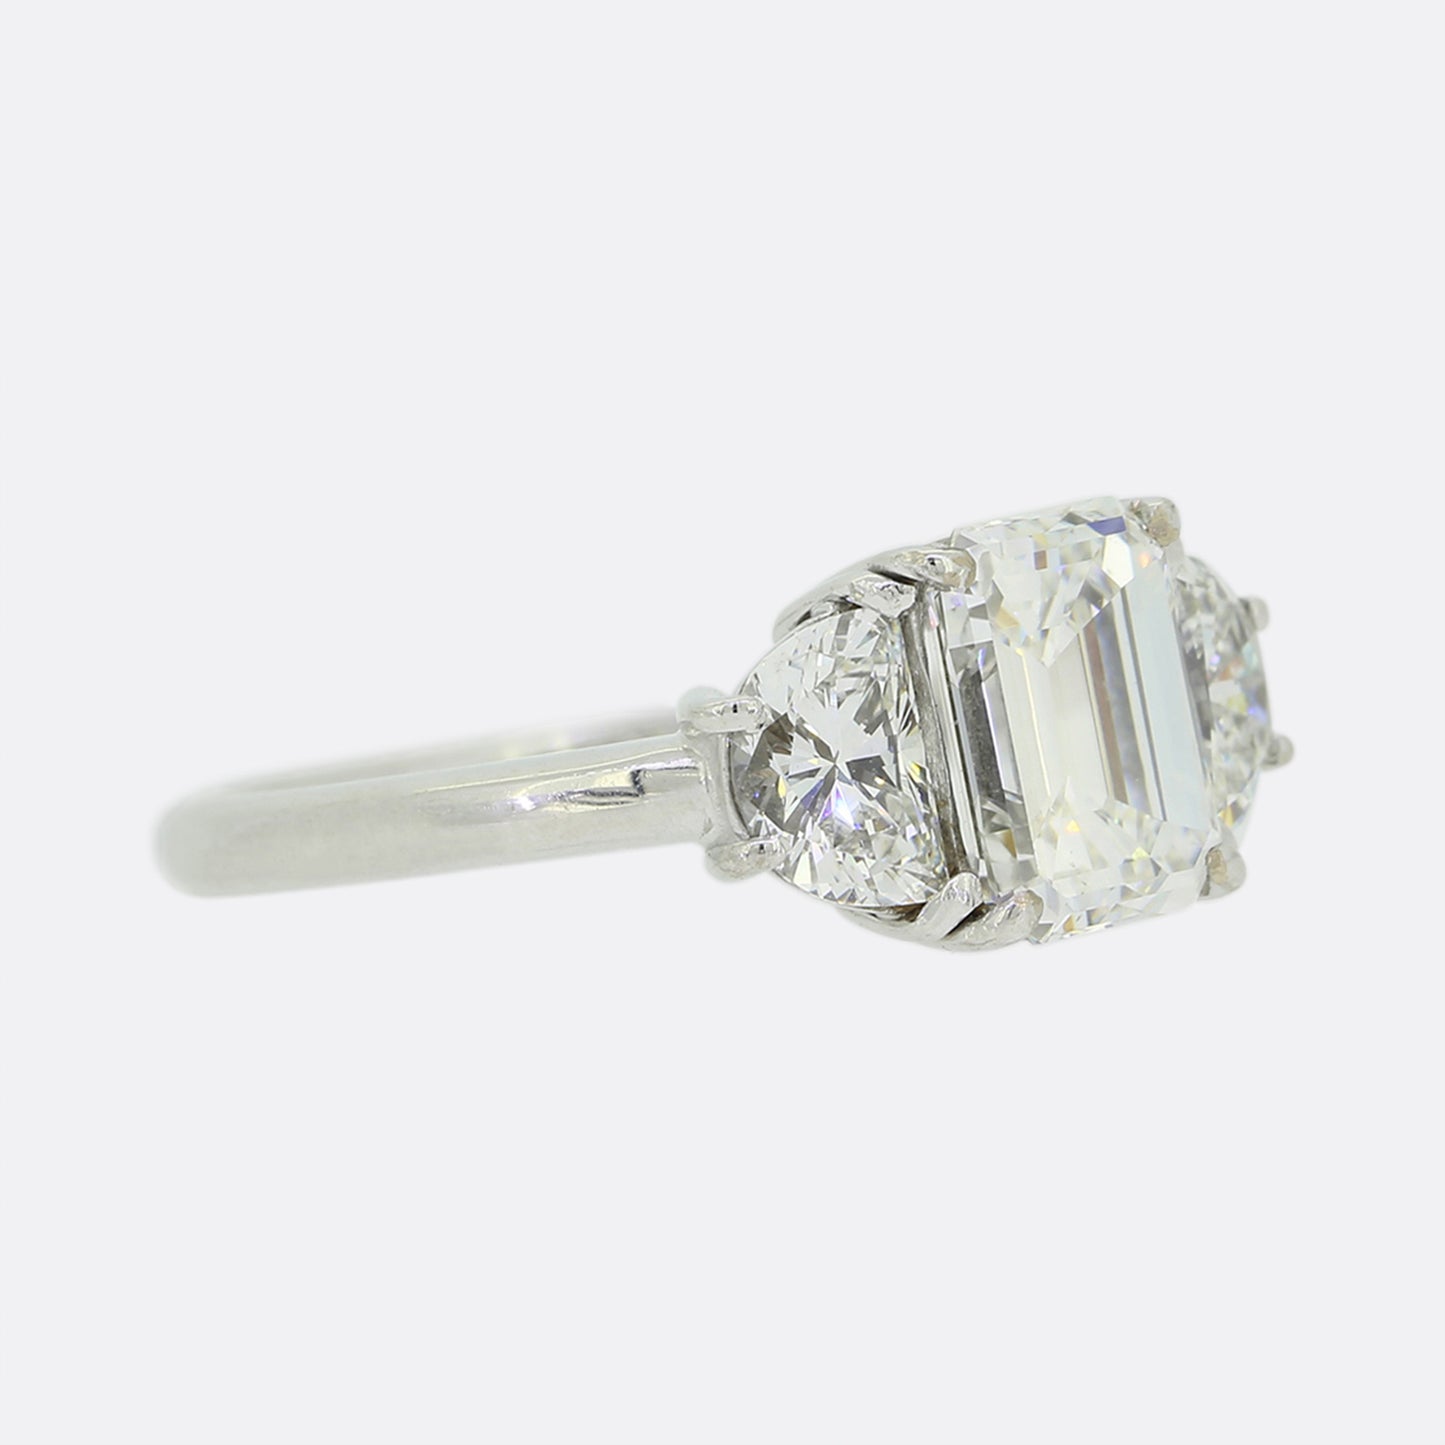 1.31 Carat Emerald Cut Diamond Engagement Ring